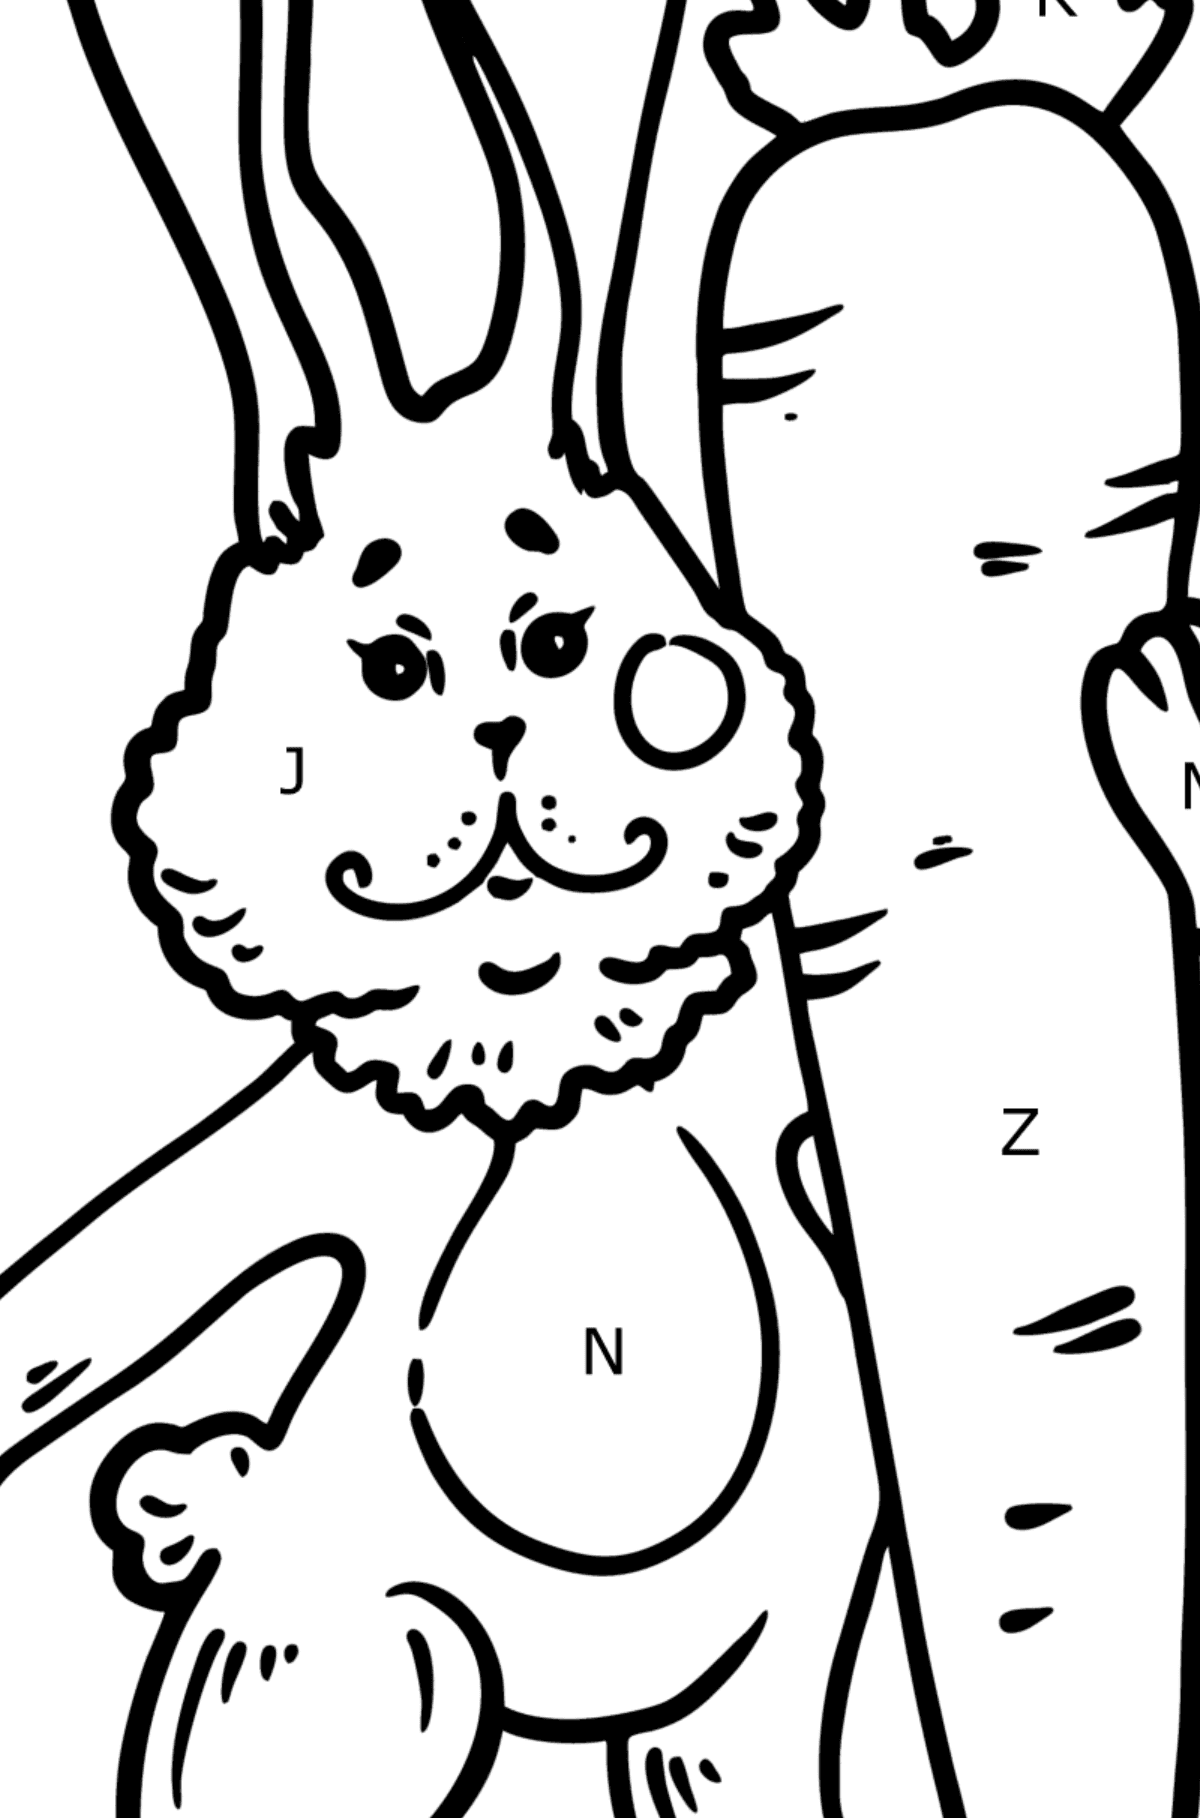 Mewarnai gambar kelinci dengan wortel - Pewarnaan mengikuti Huruf untuk anak-anak